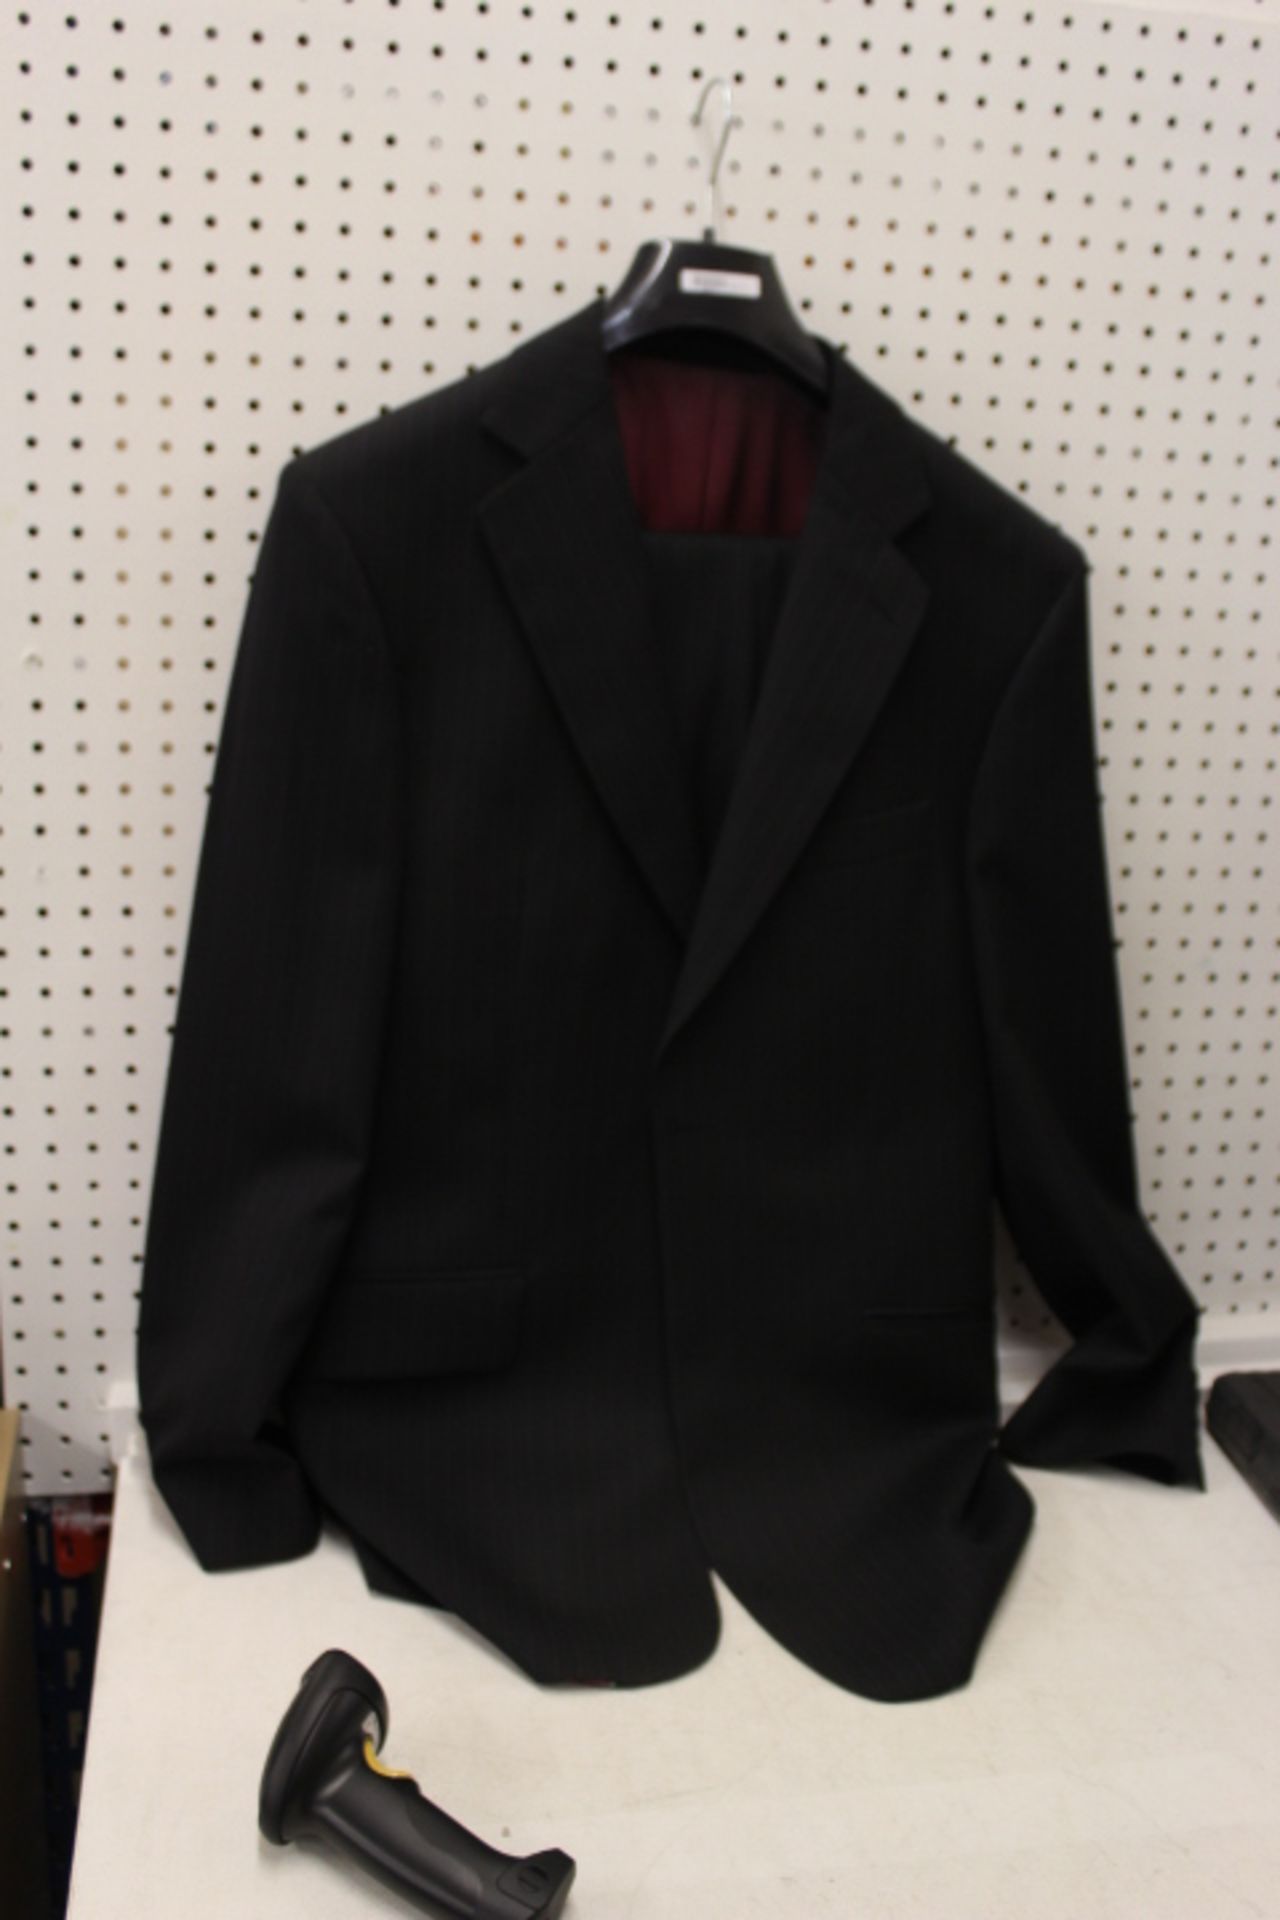 Gents Two Piece John Hopkinson Pin Stripe Suit Size 40L